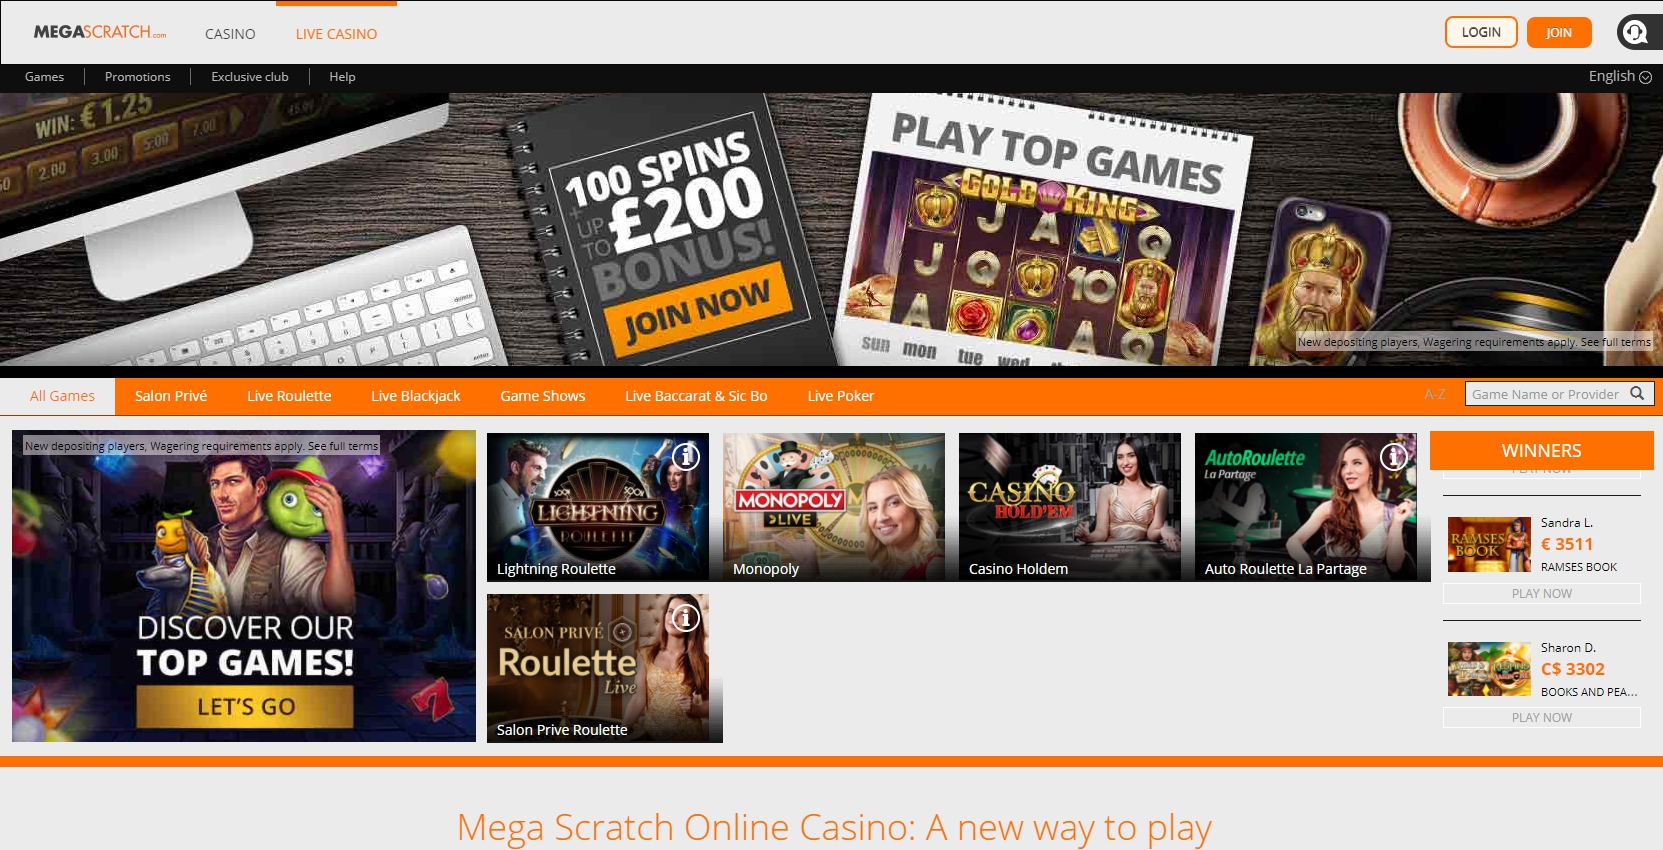 Mega Scratch Casino Live Dealer Games